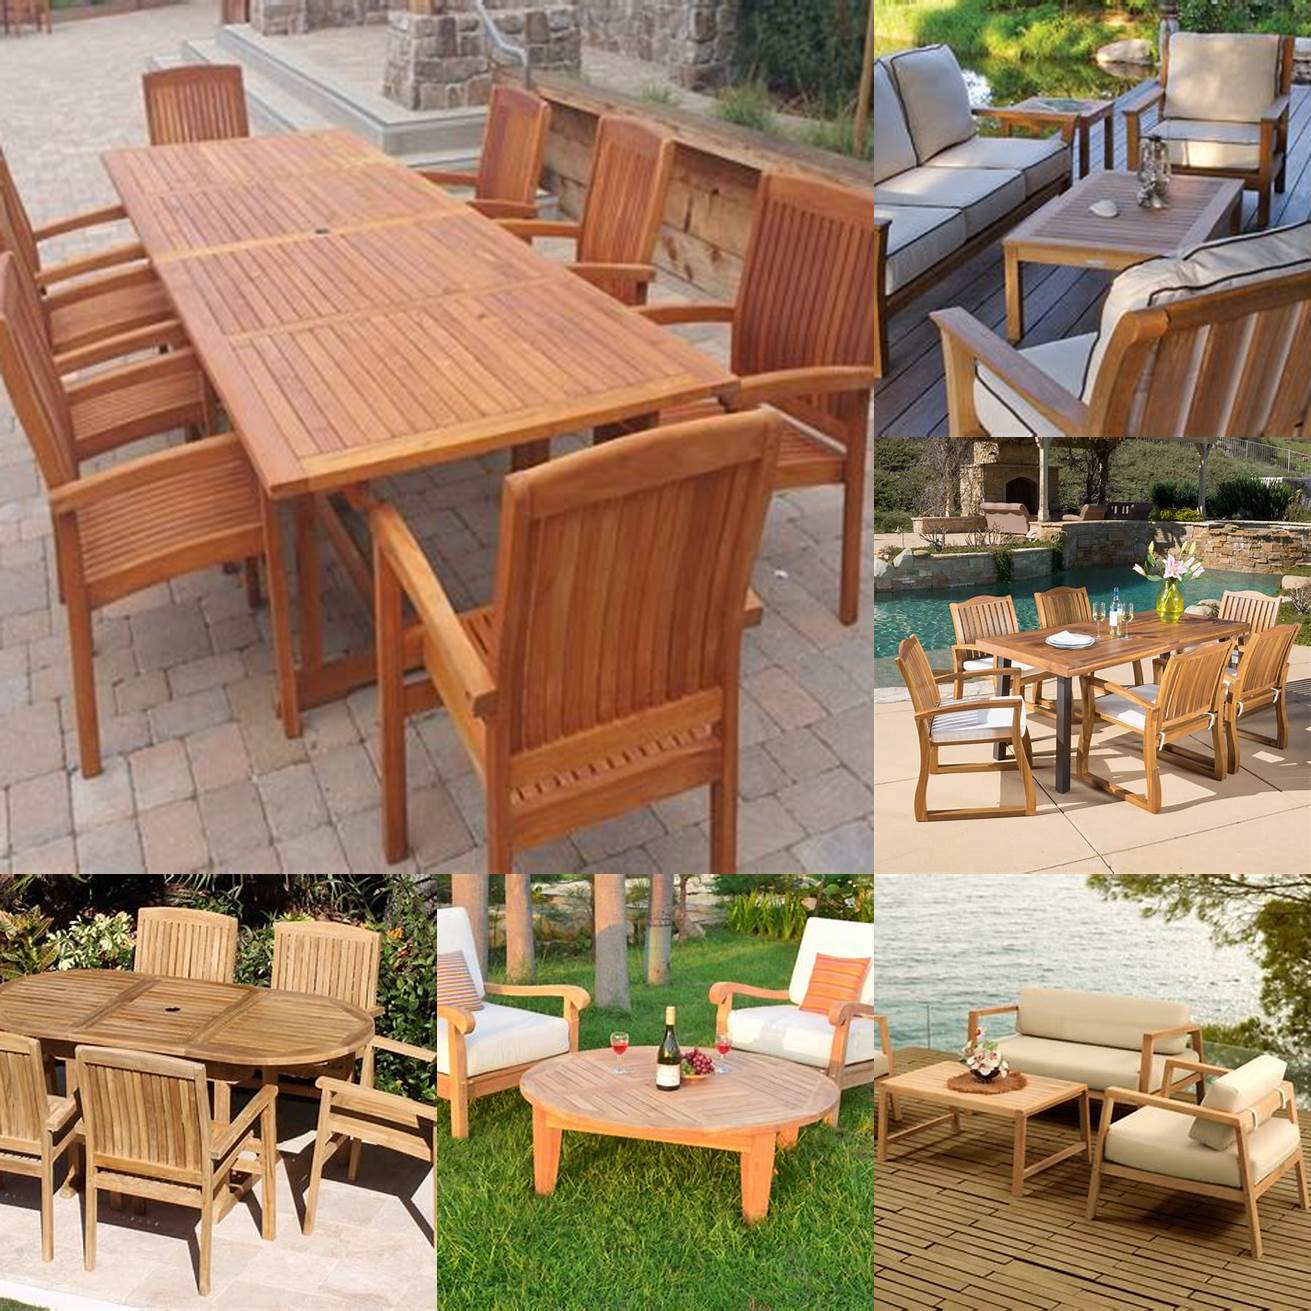 Enjoy your teak wood outdoor furniture